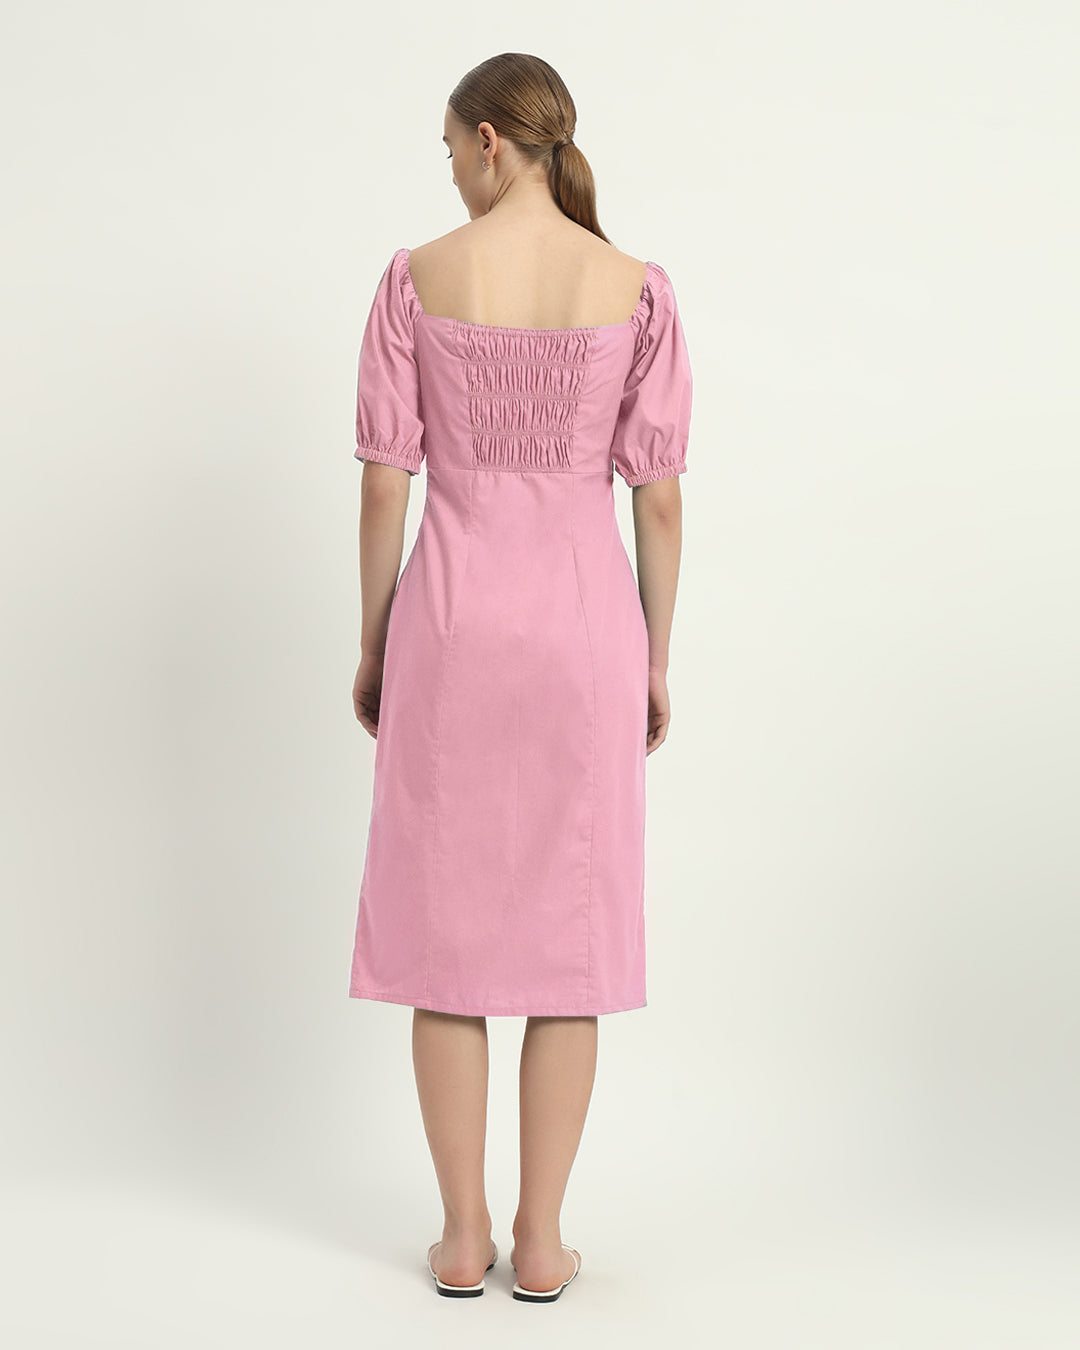 The Fondant Pink Erwin Cotton Dress